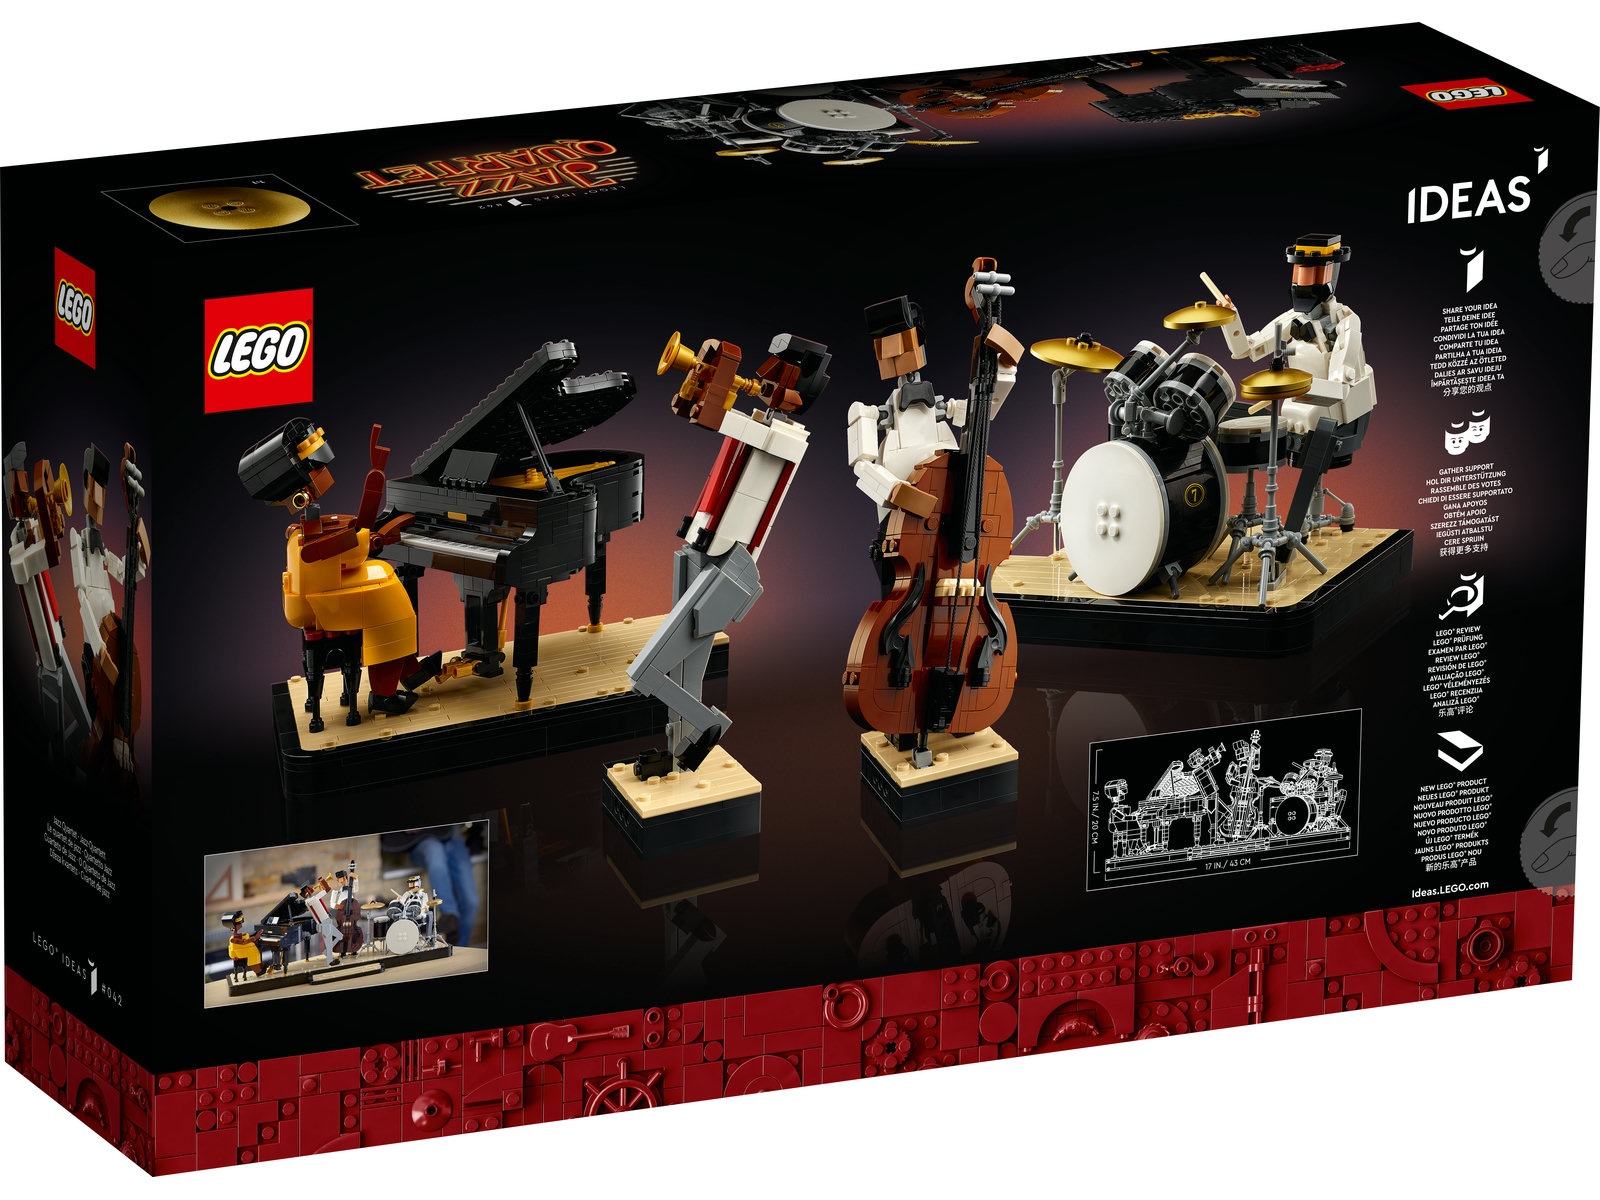 LEGO® Ideas 21334 - Jazz-Quartett